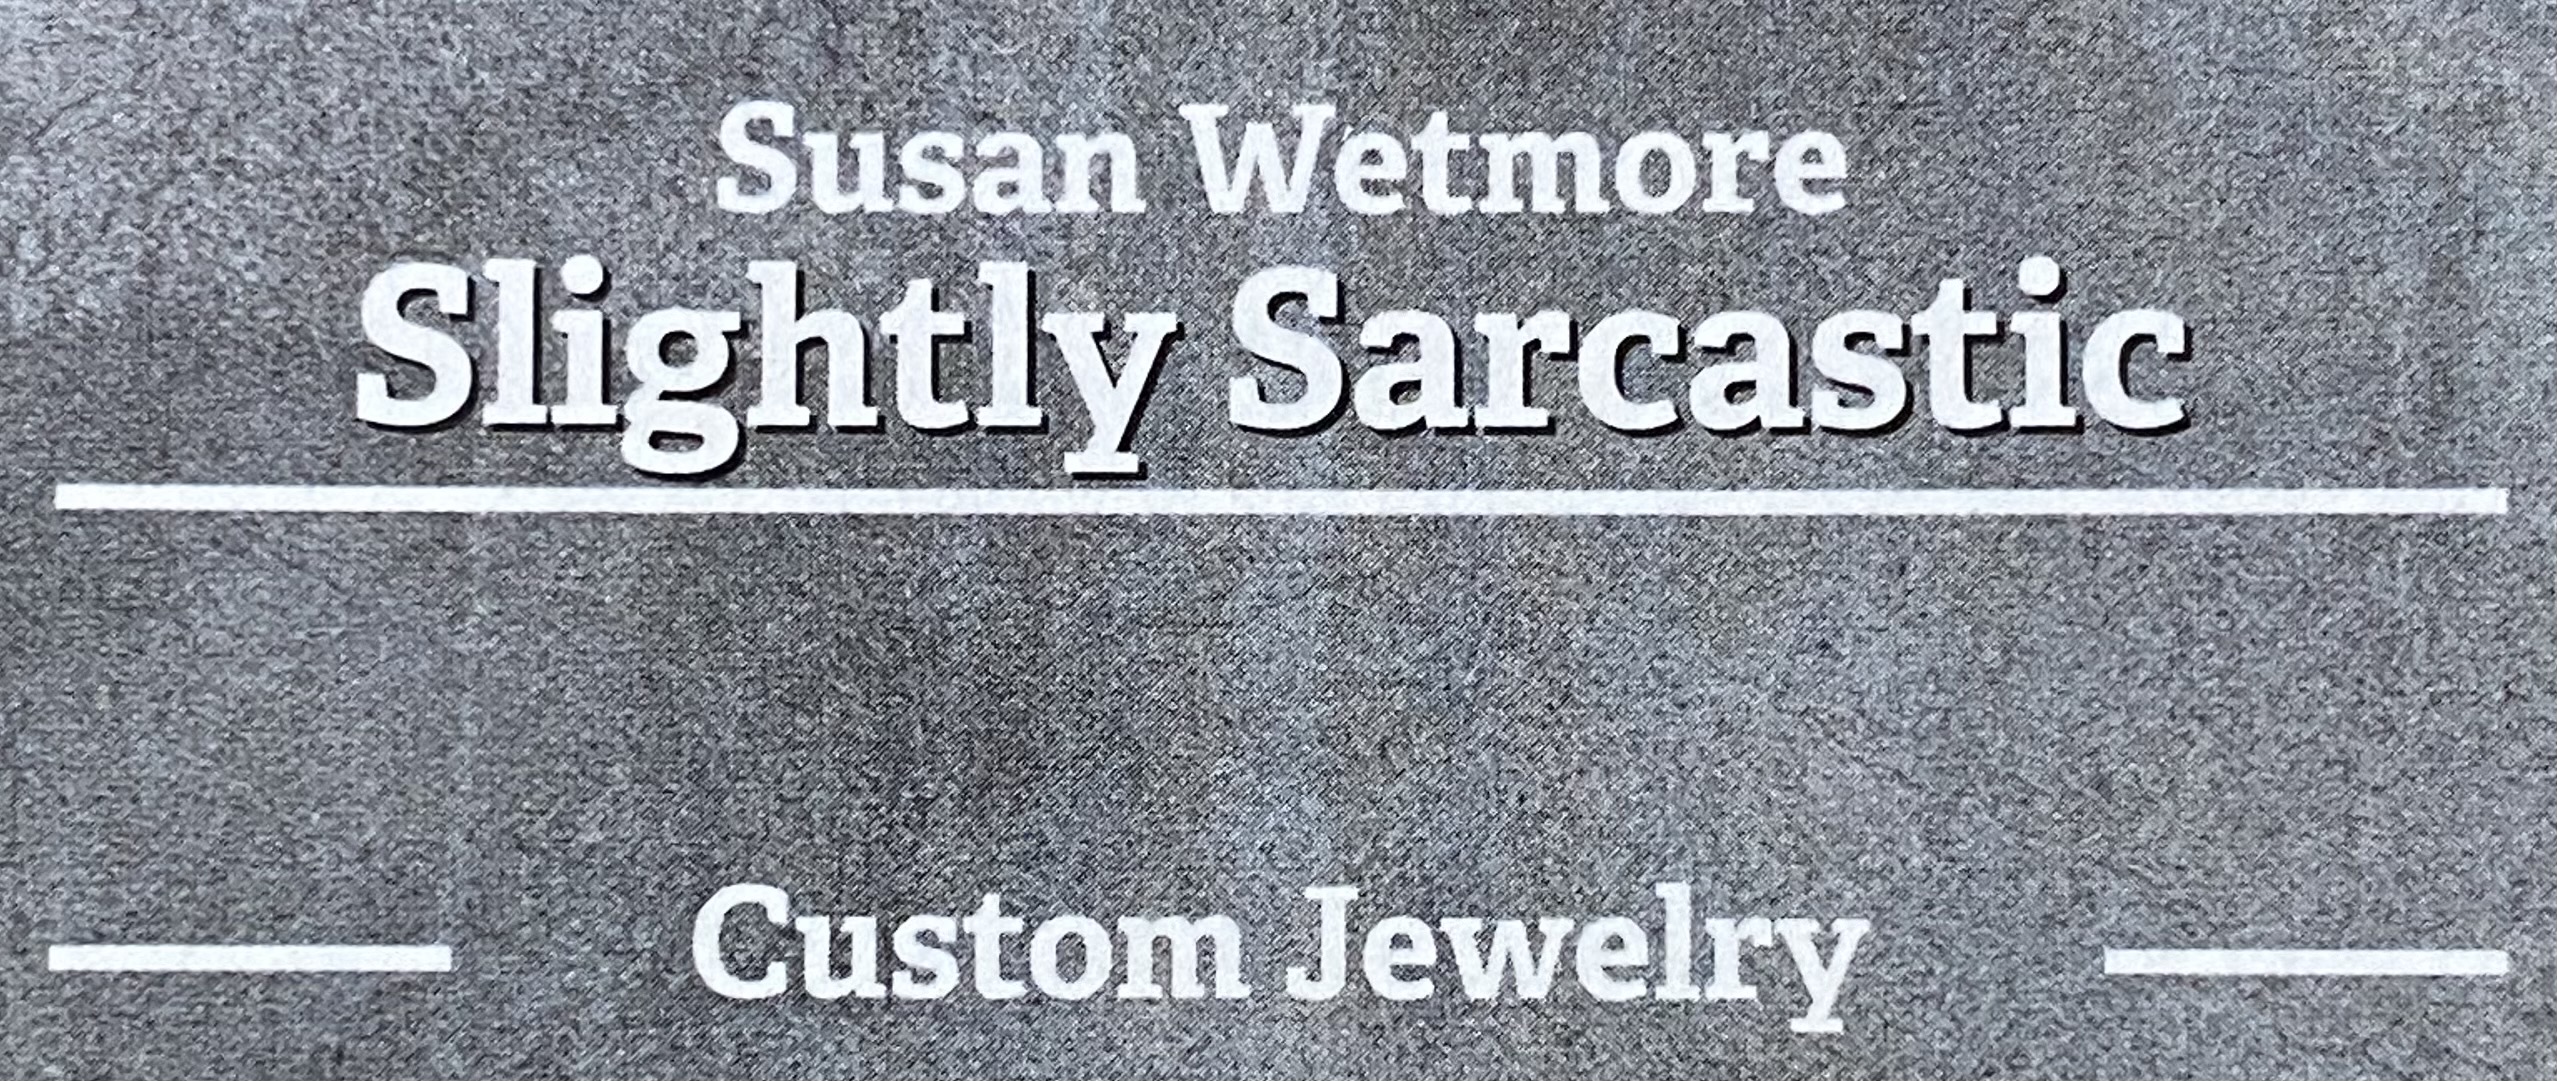 Slightly Sarcastic Jewelry - Susan Wetmore